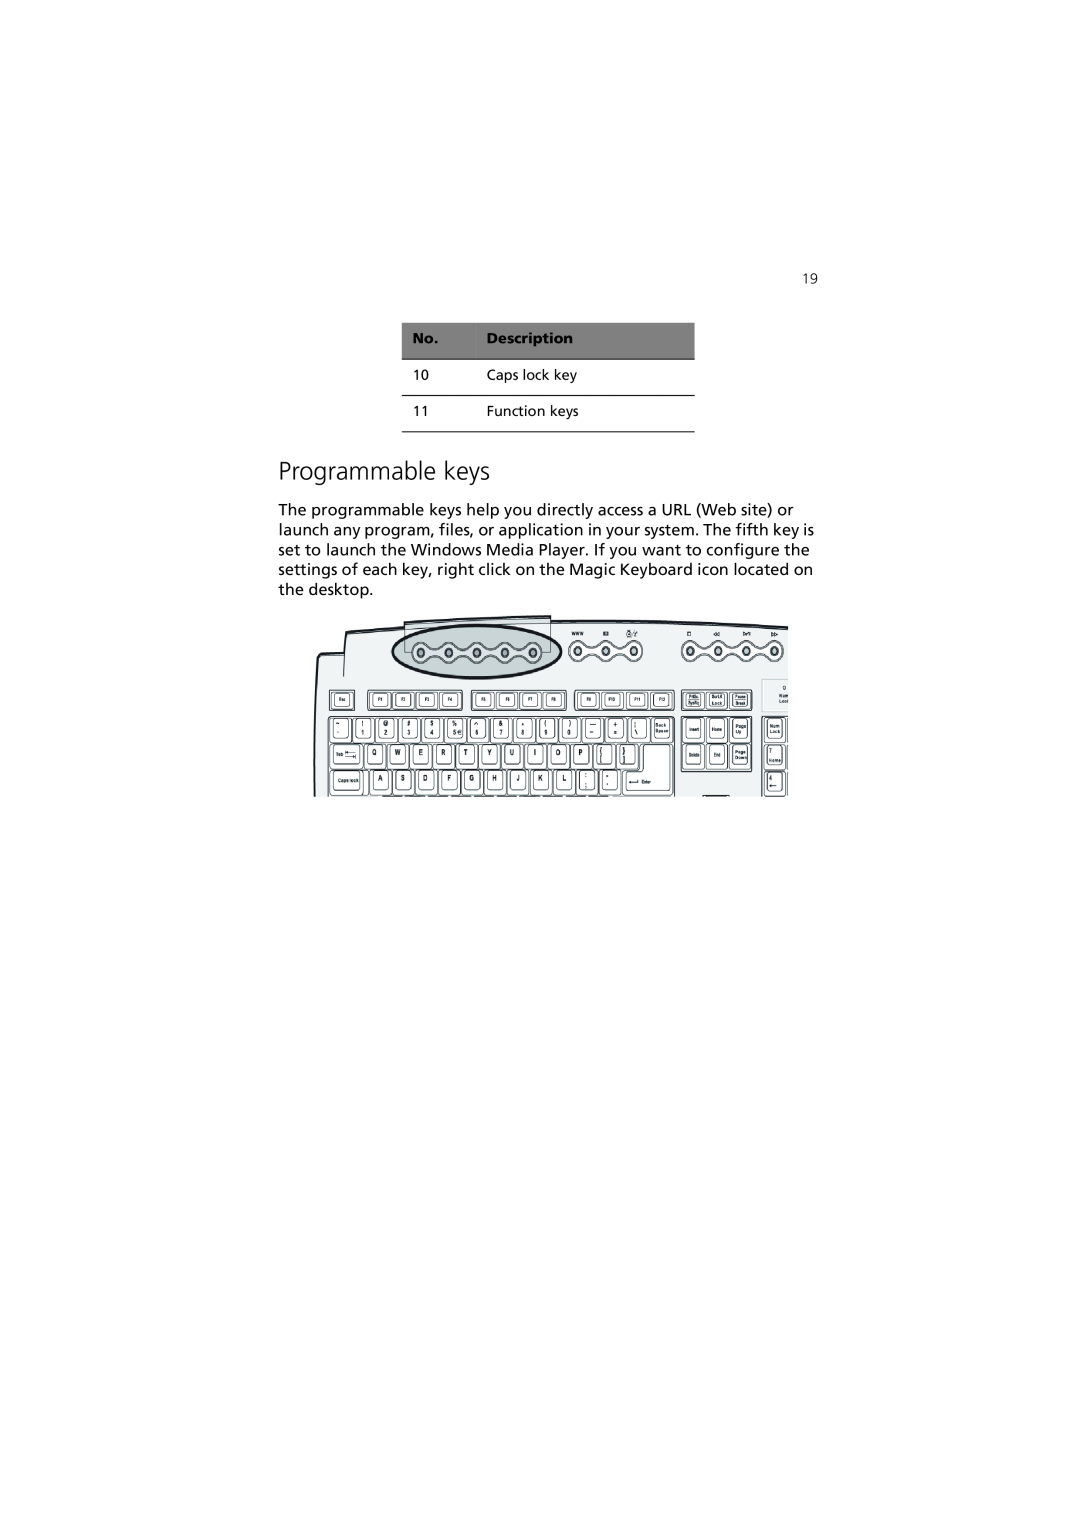 Acer 7600 manual Programmable keys, No. Description 